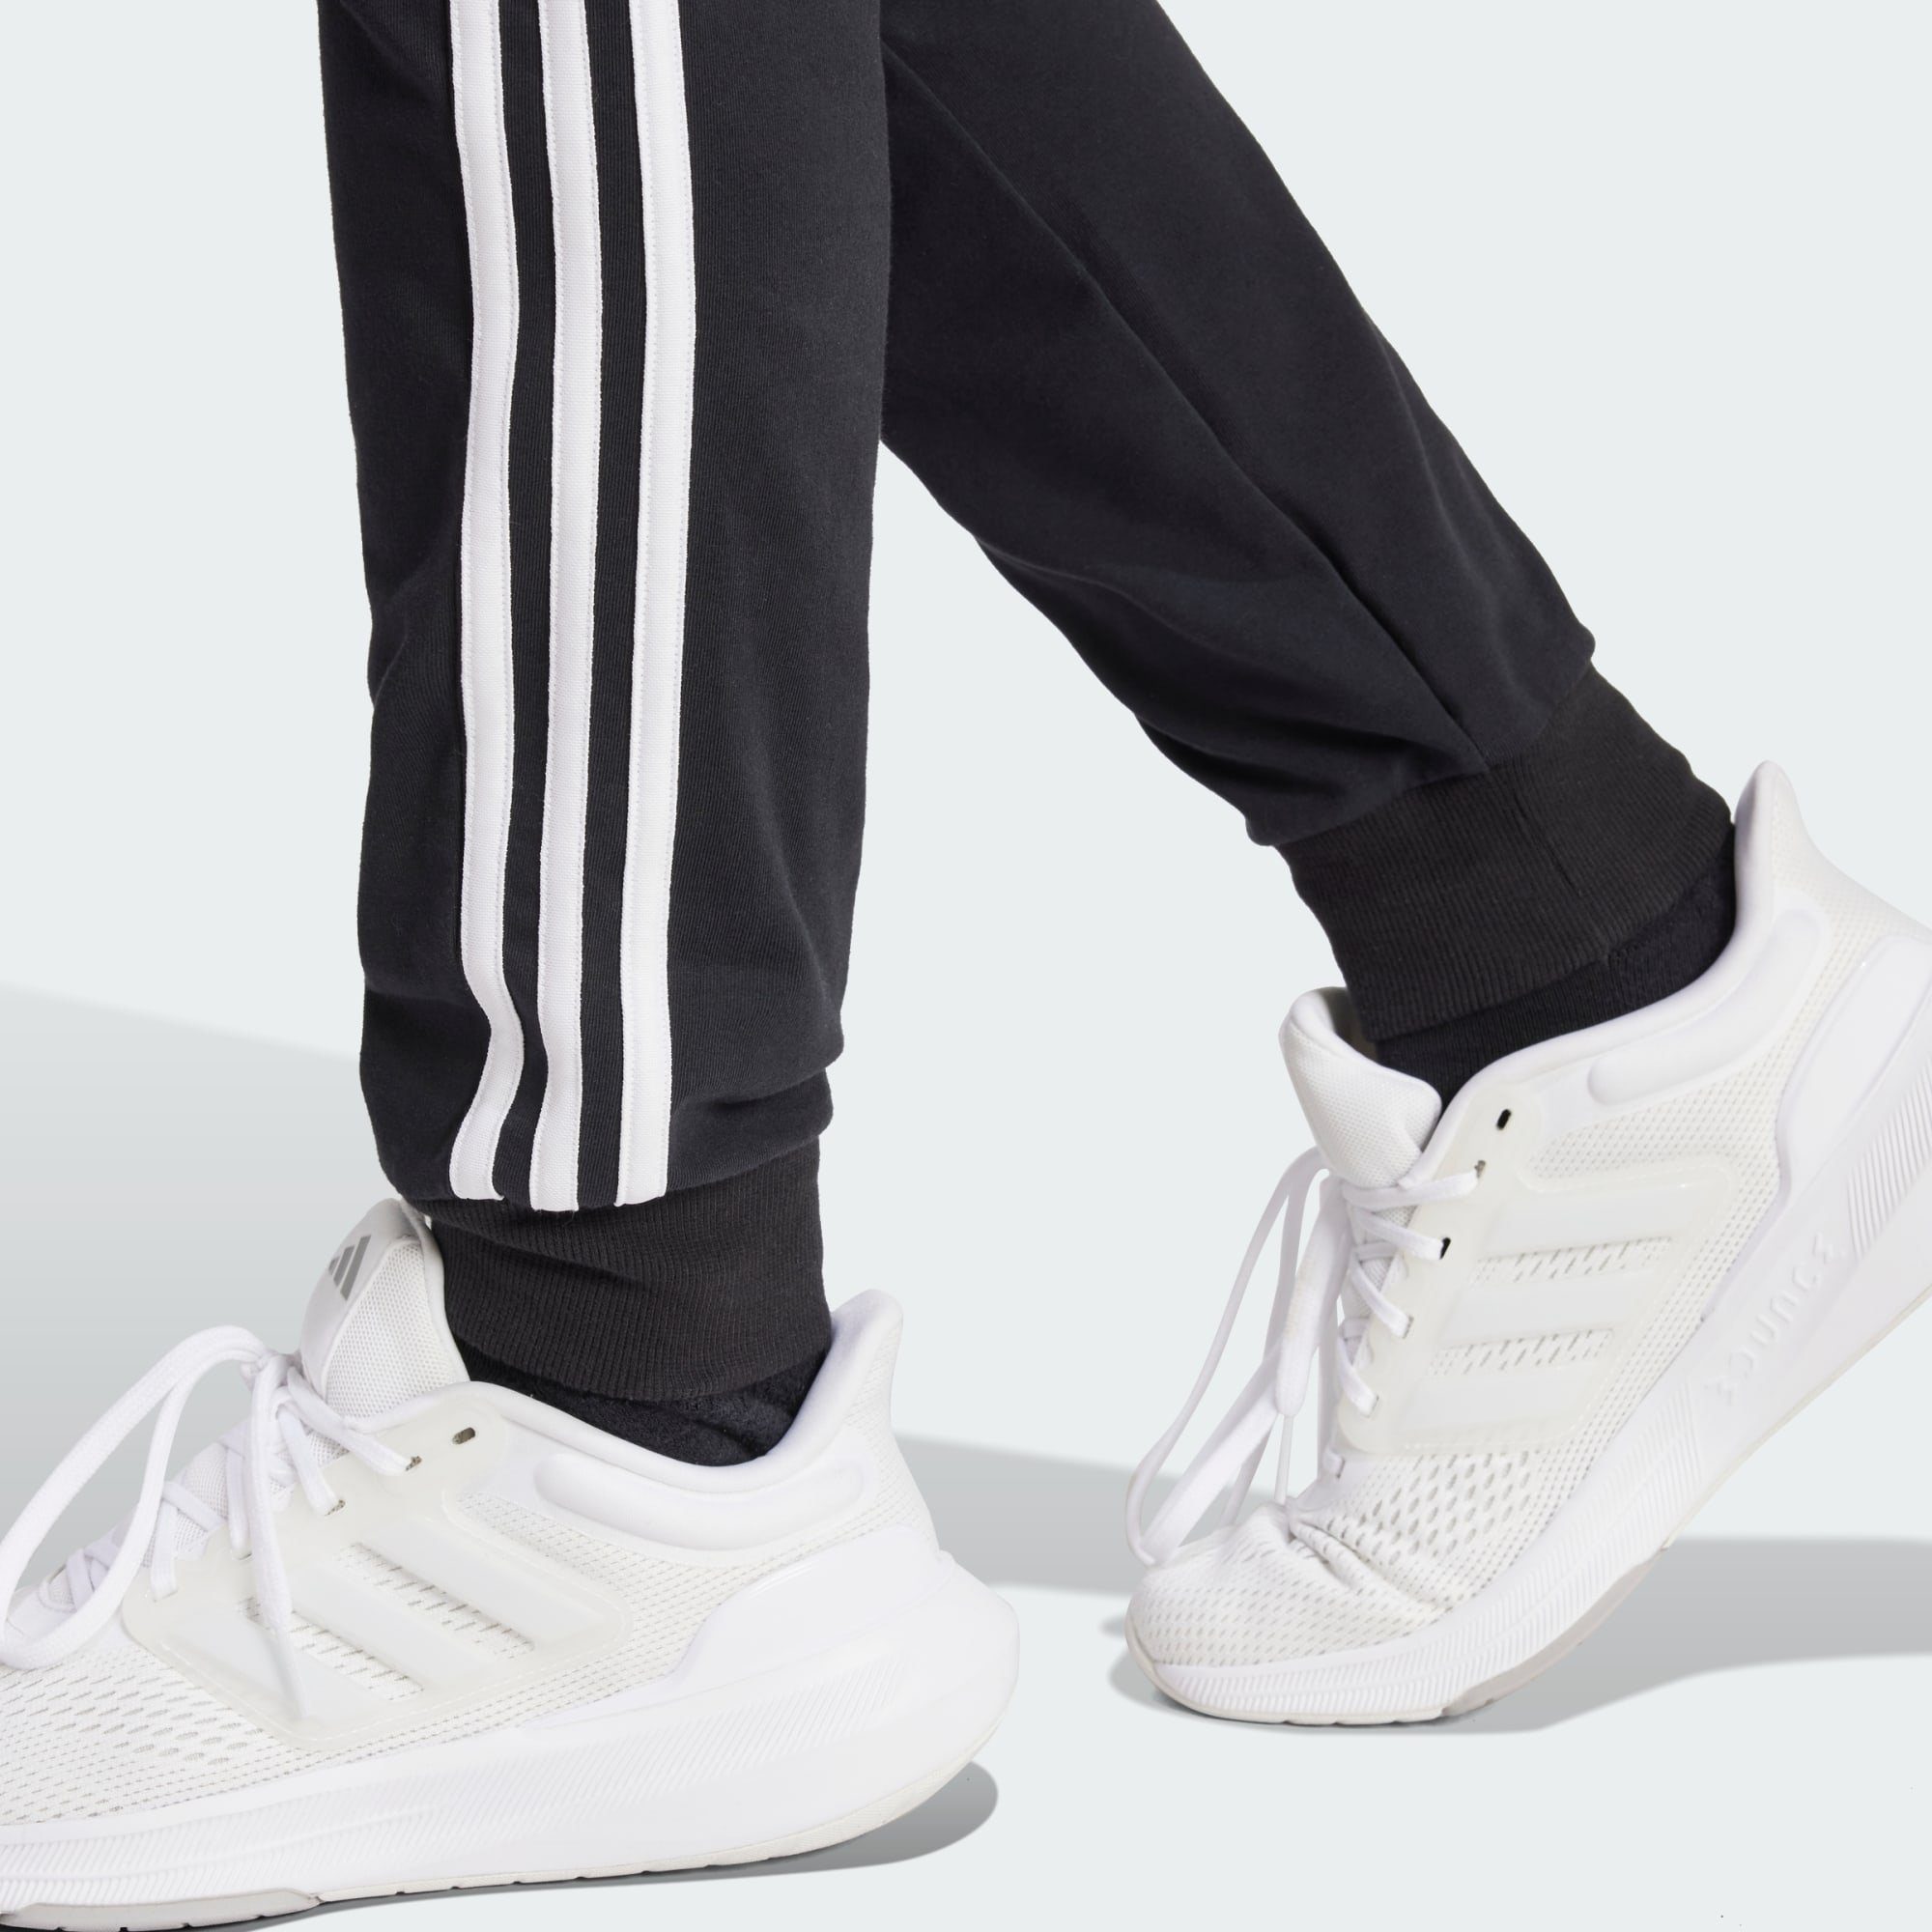 SINGLE adidas / ESSENTIALS JERSEY 3-STREIFEN Black Jogginghose White HOSE Sportswear